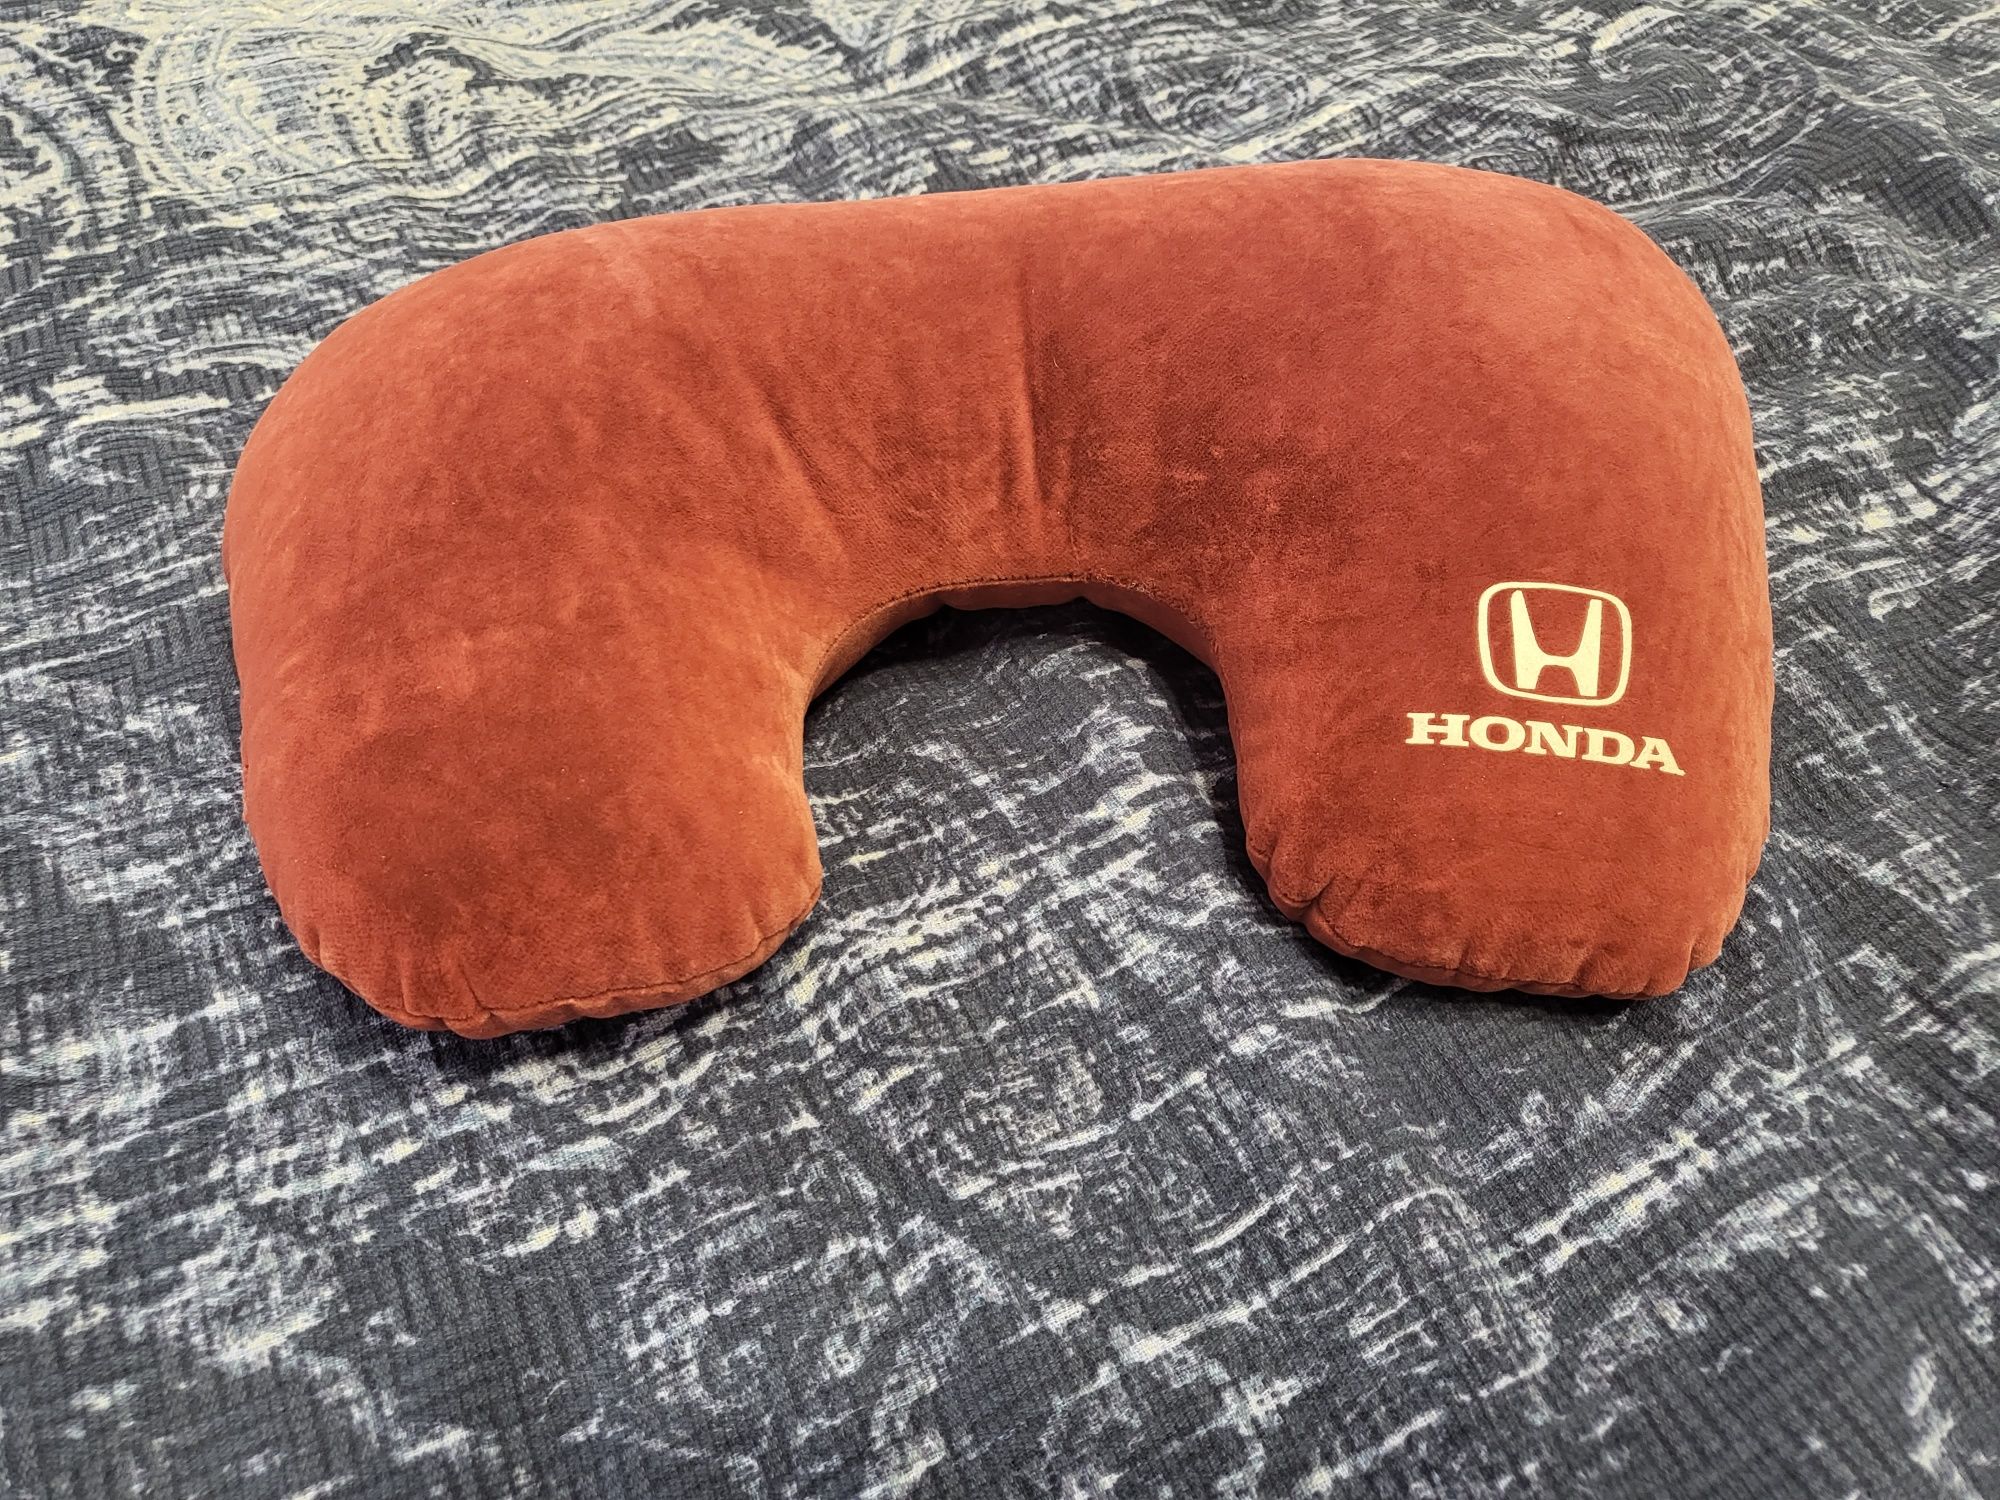 Подушка-подголовник, подушка Honda, подушка в машину